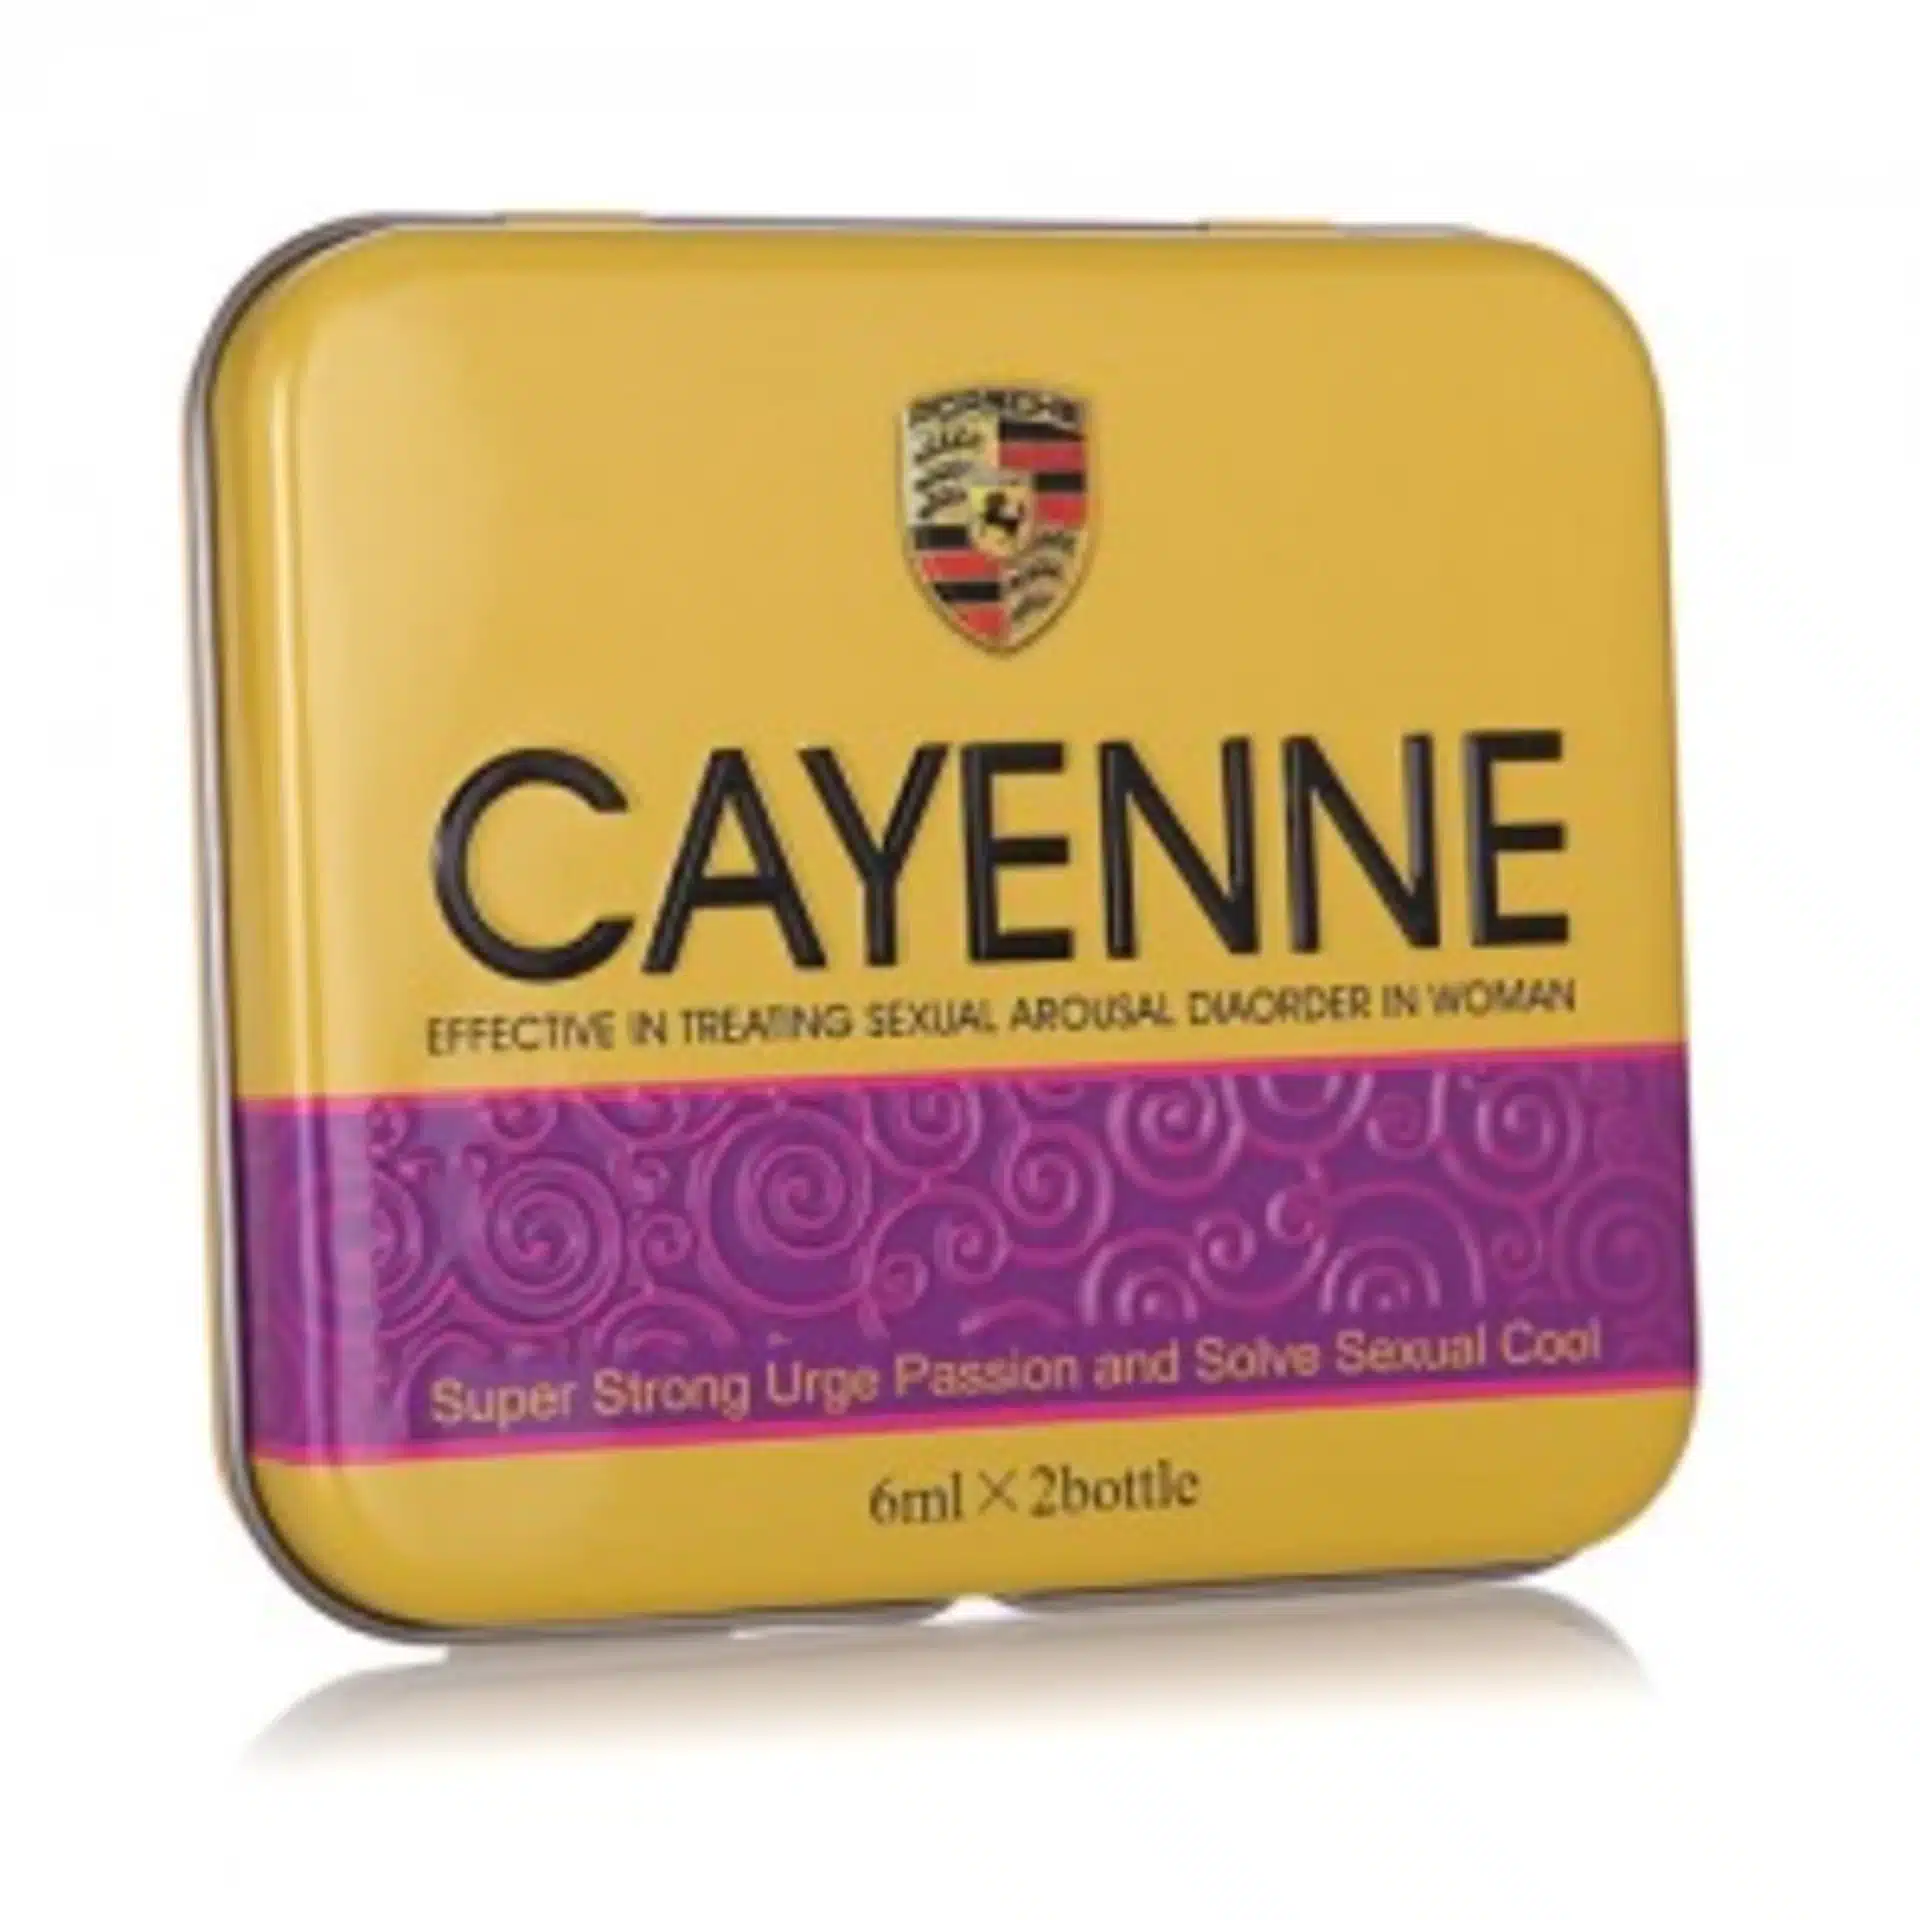 Cayenne female drops UAE